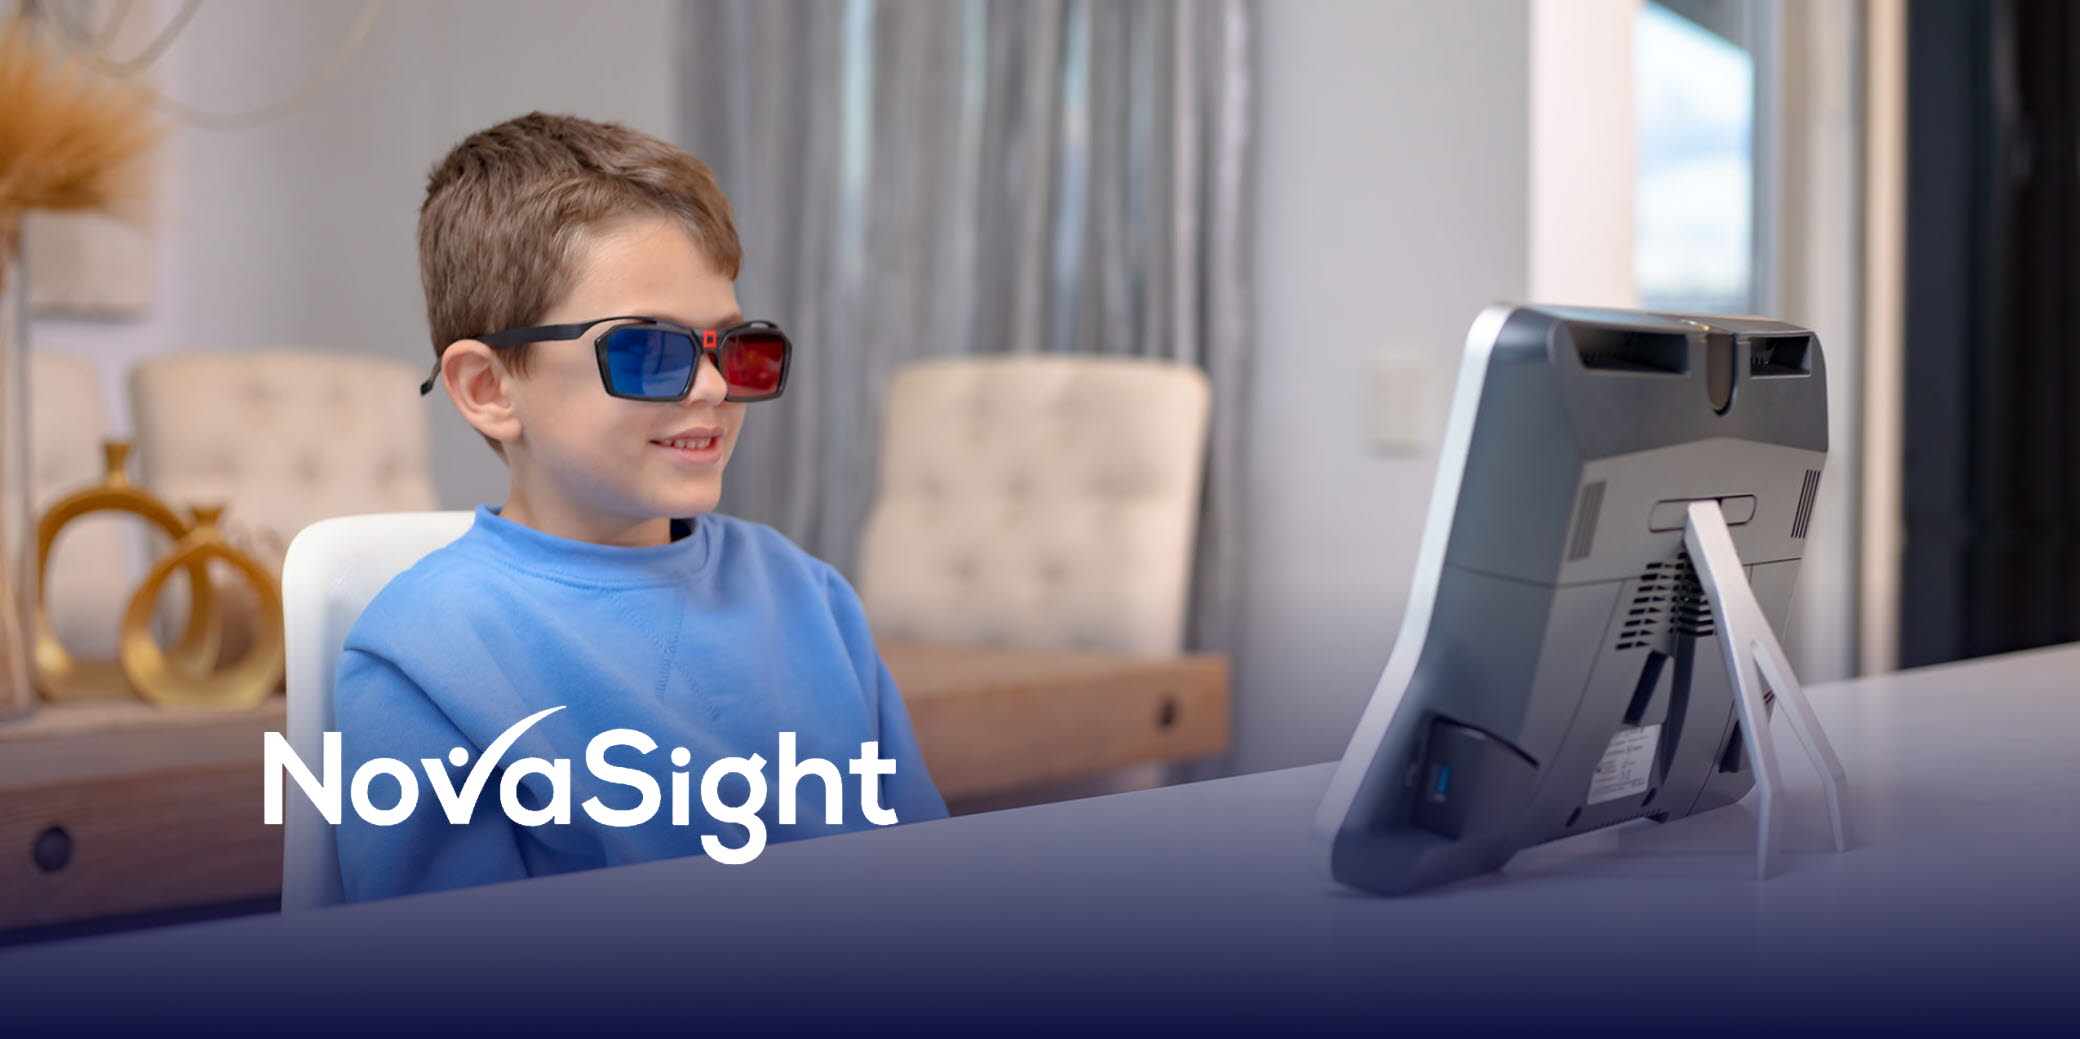 Boy with NovaSight 3D glasses